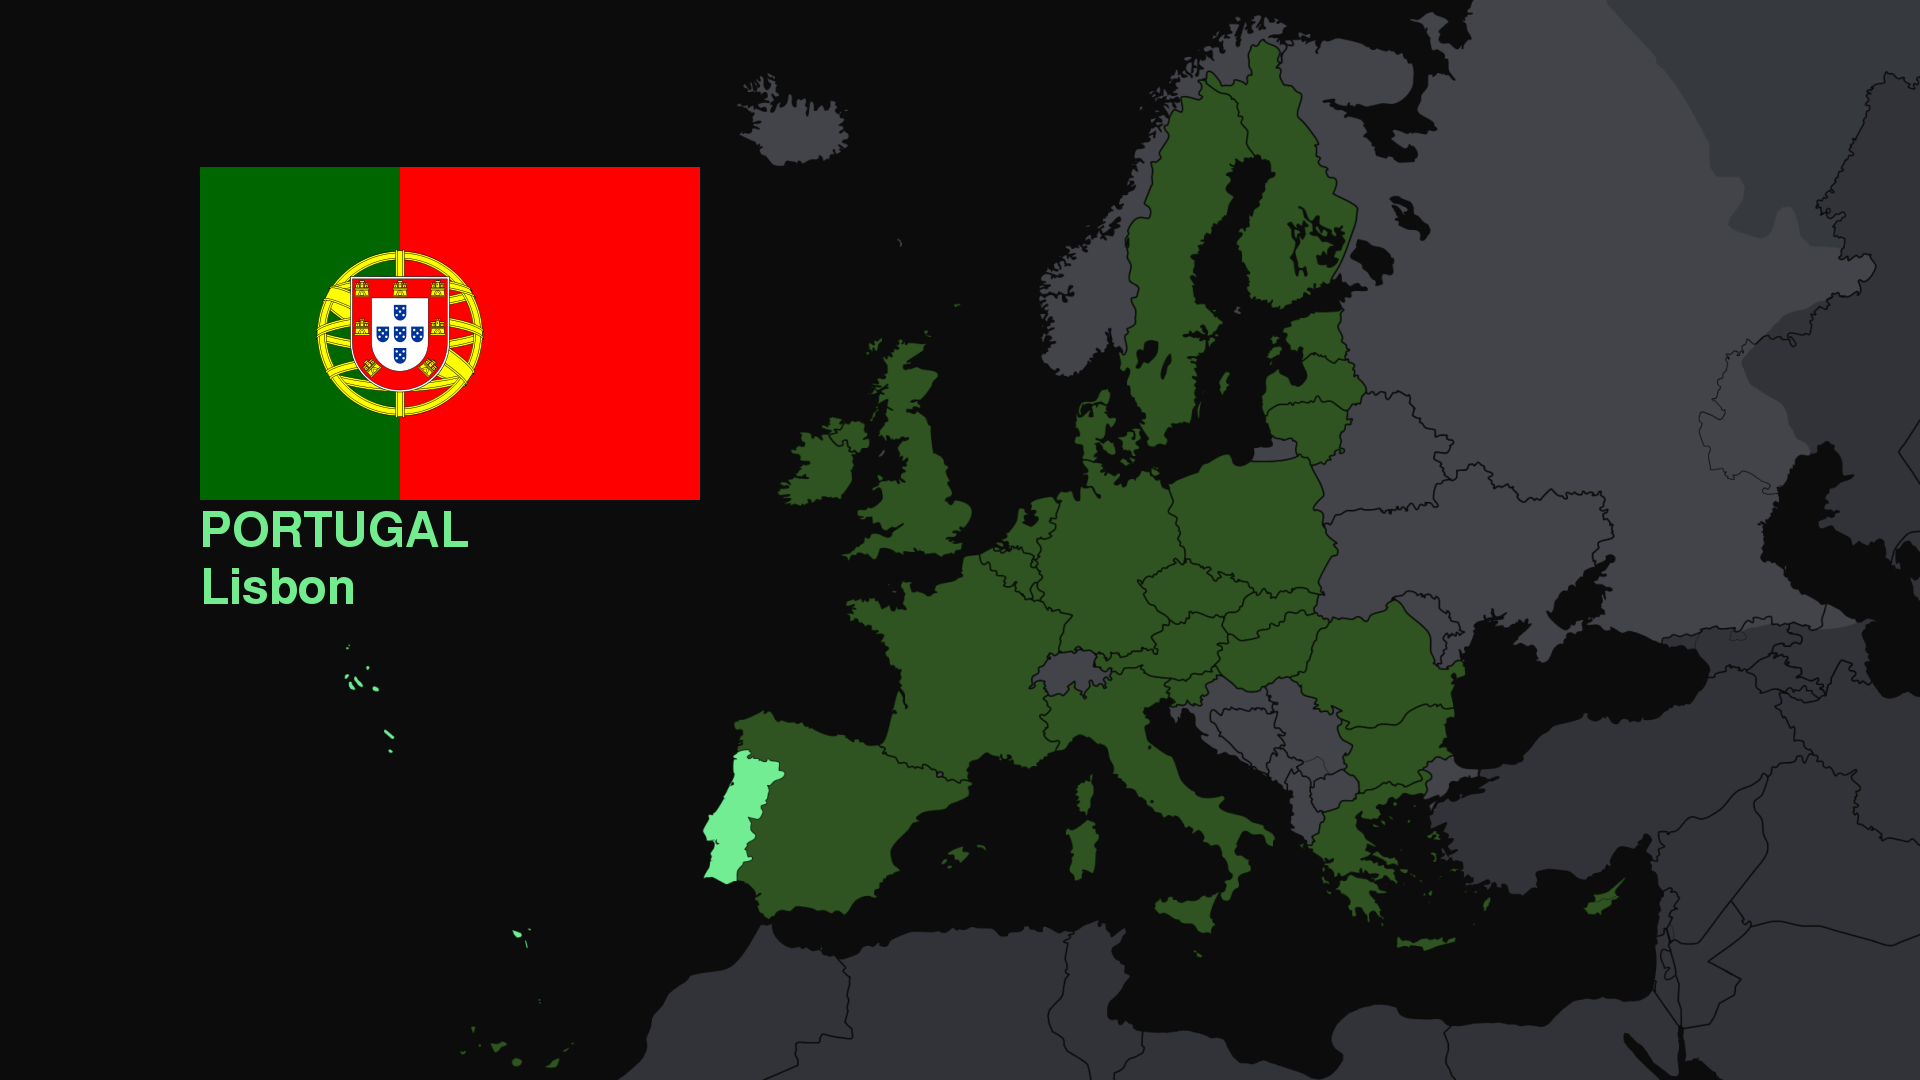 General 1920x1080 Portugal Europe map flag digital art text